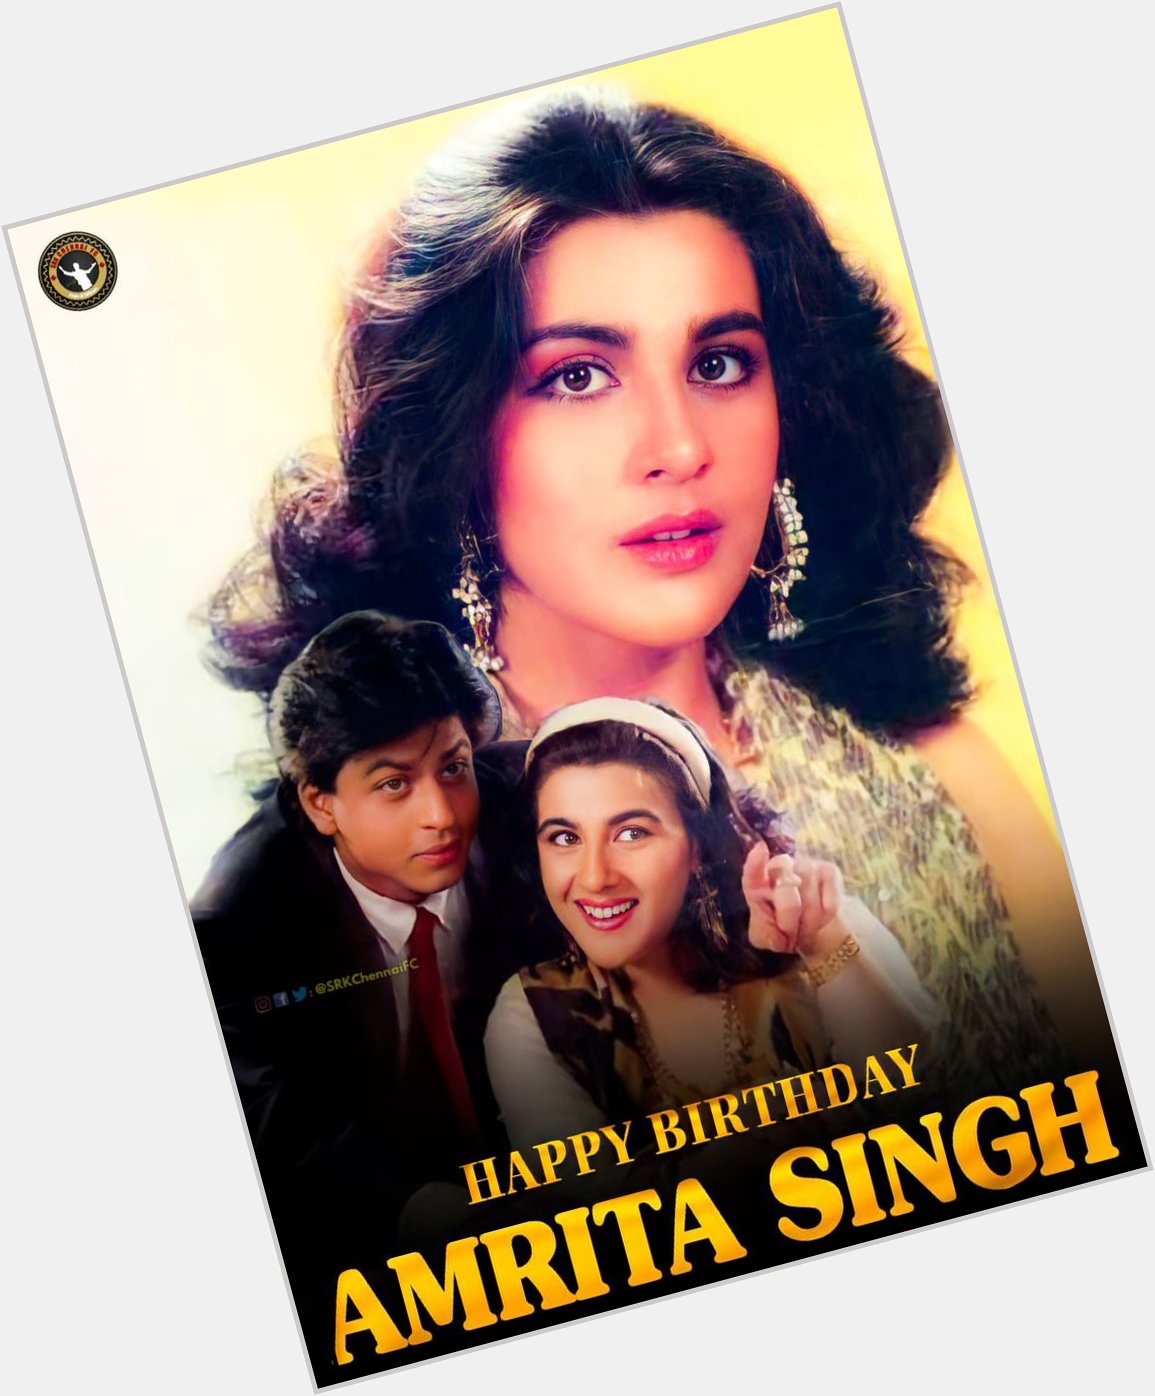 Wishing a very happy birthday to wonderful actress Amrita Singh! 